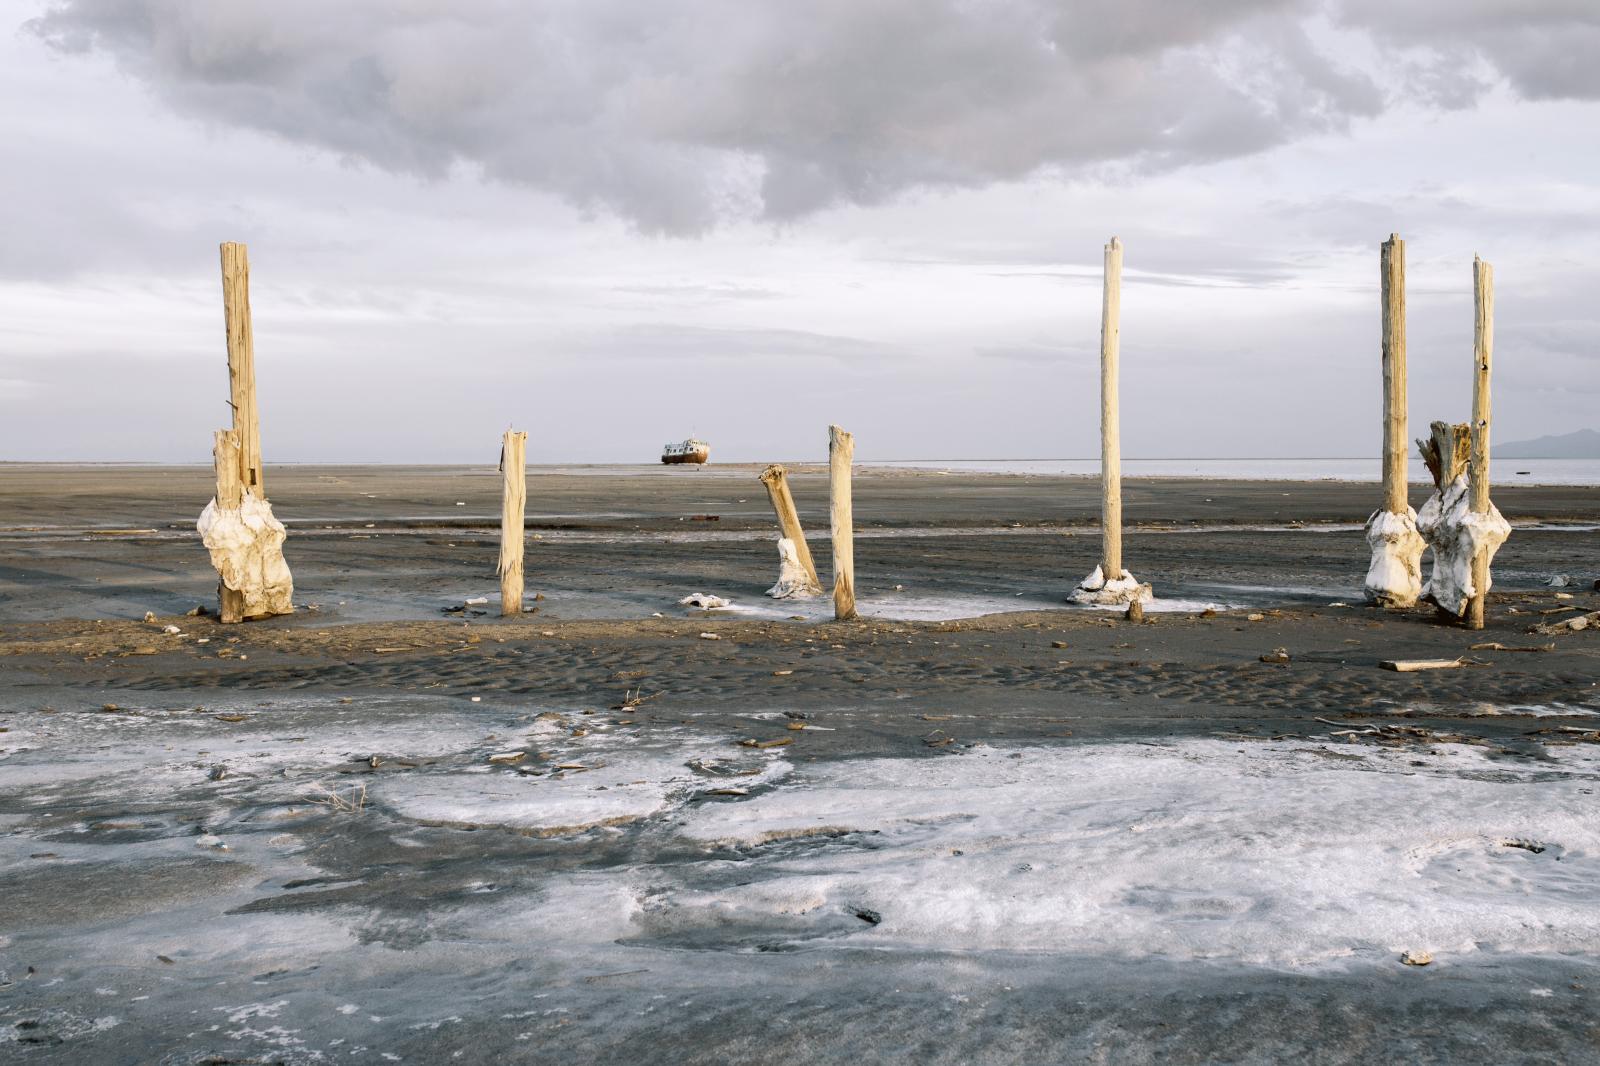 Lake Urmia: Iran’s most famous lake is disappearing!